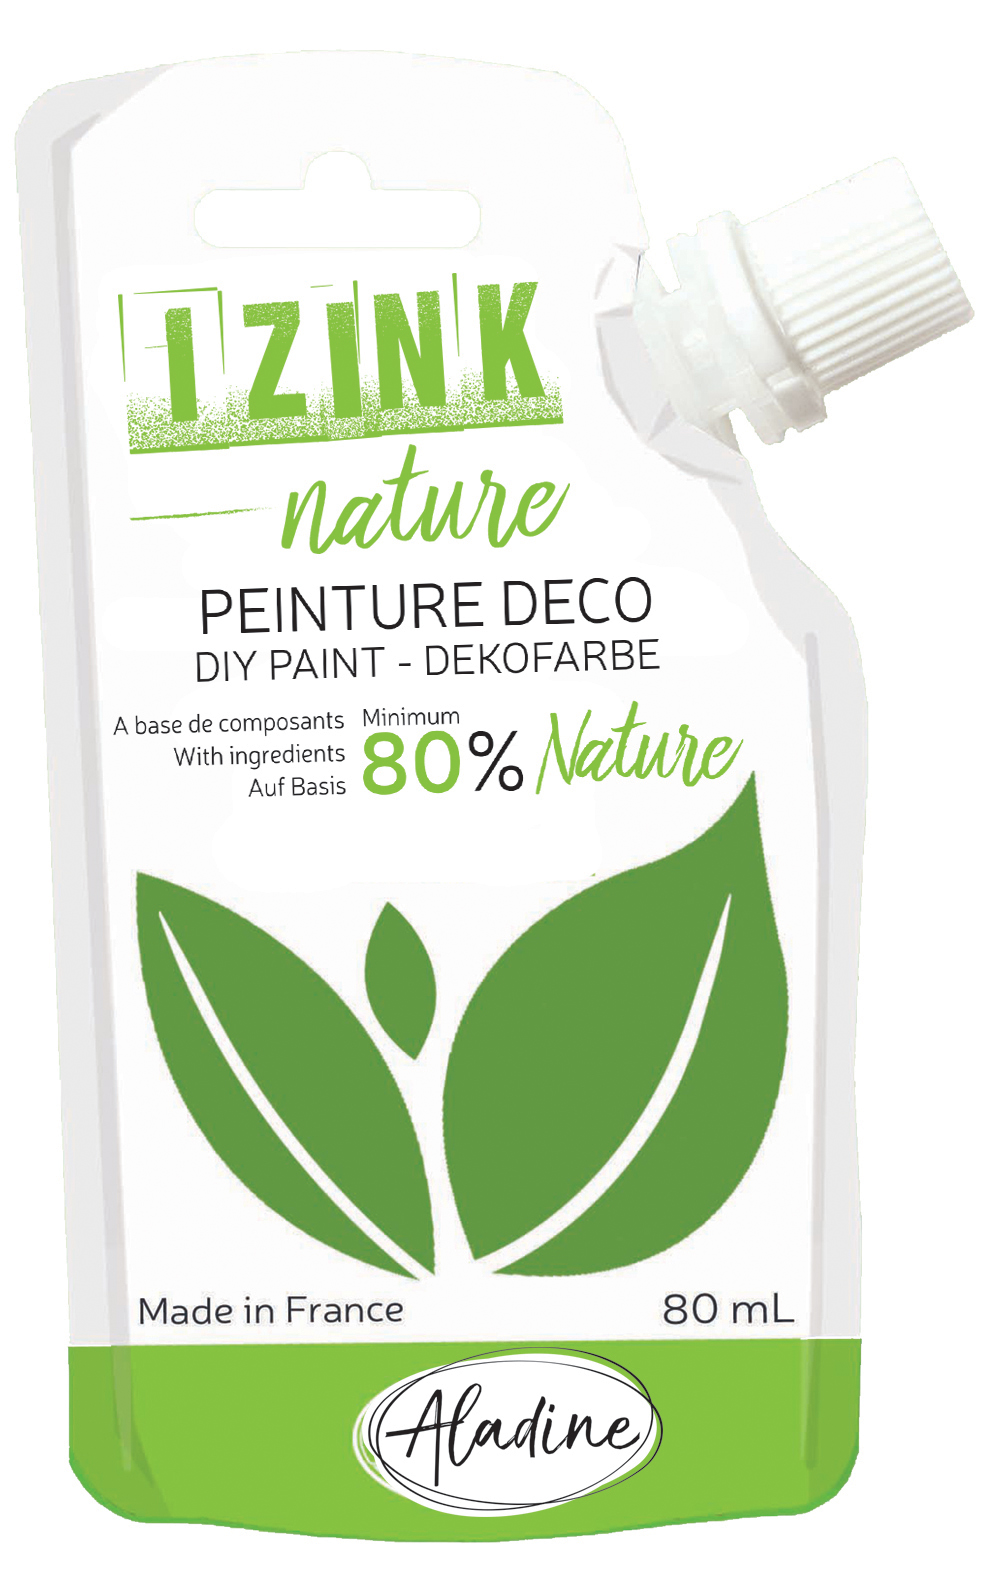 Izink Nature - Natural Deco Paint - Vert Jungle (Green Jungle) 80ml